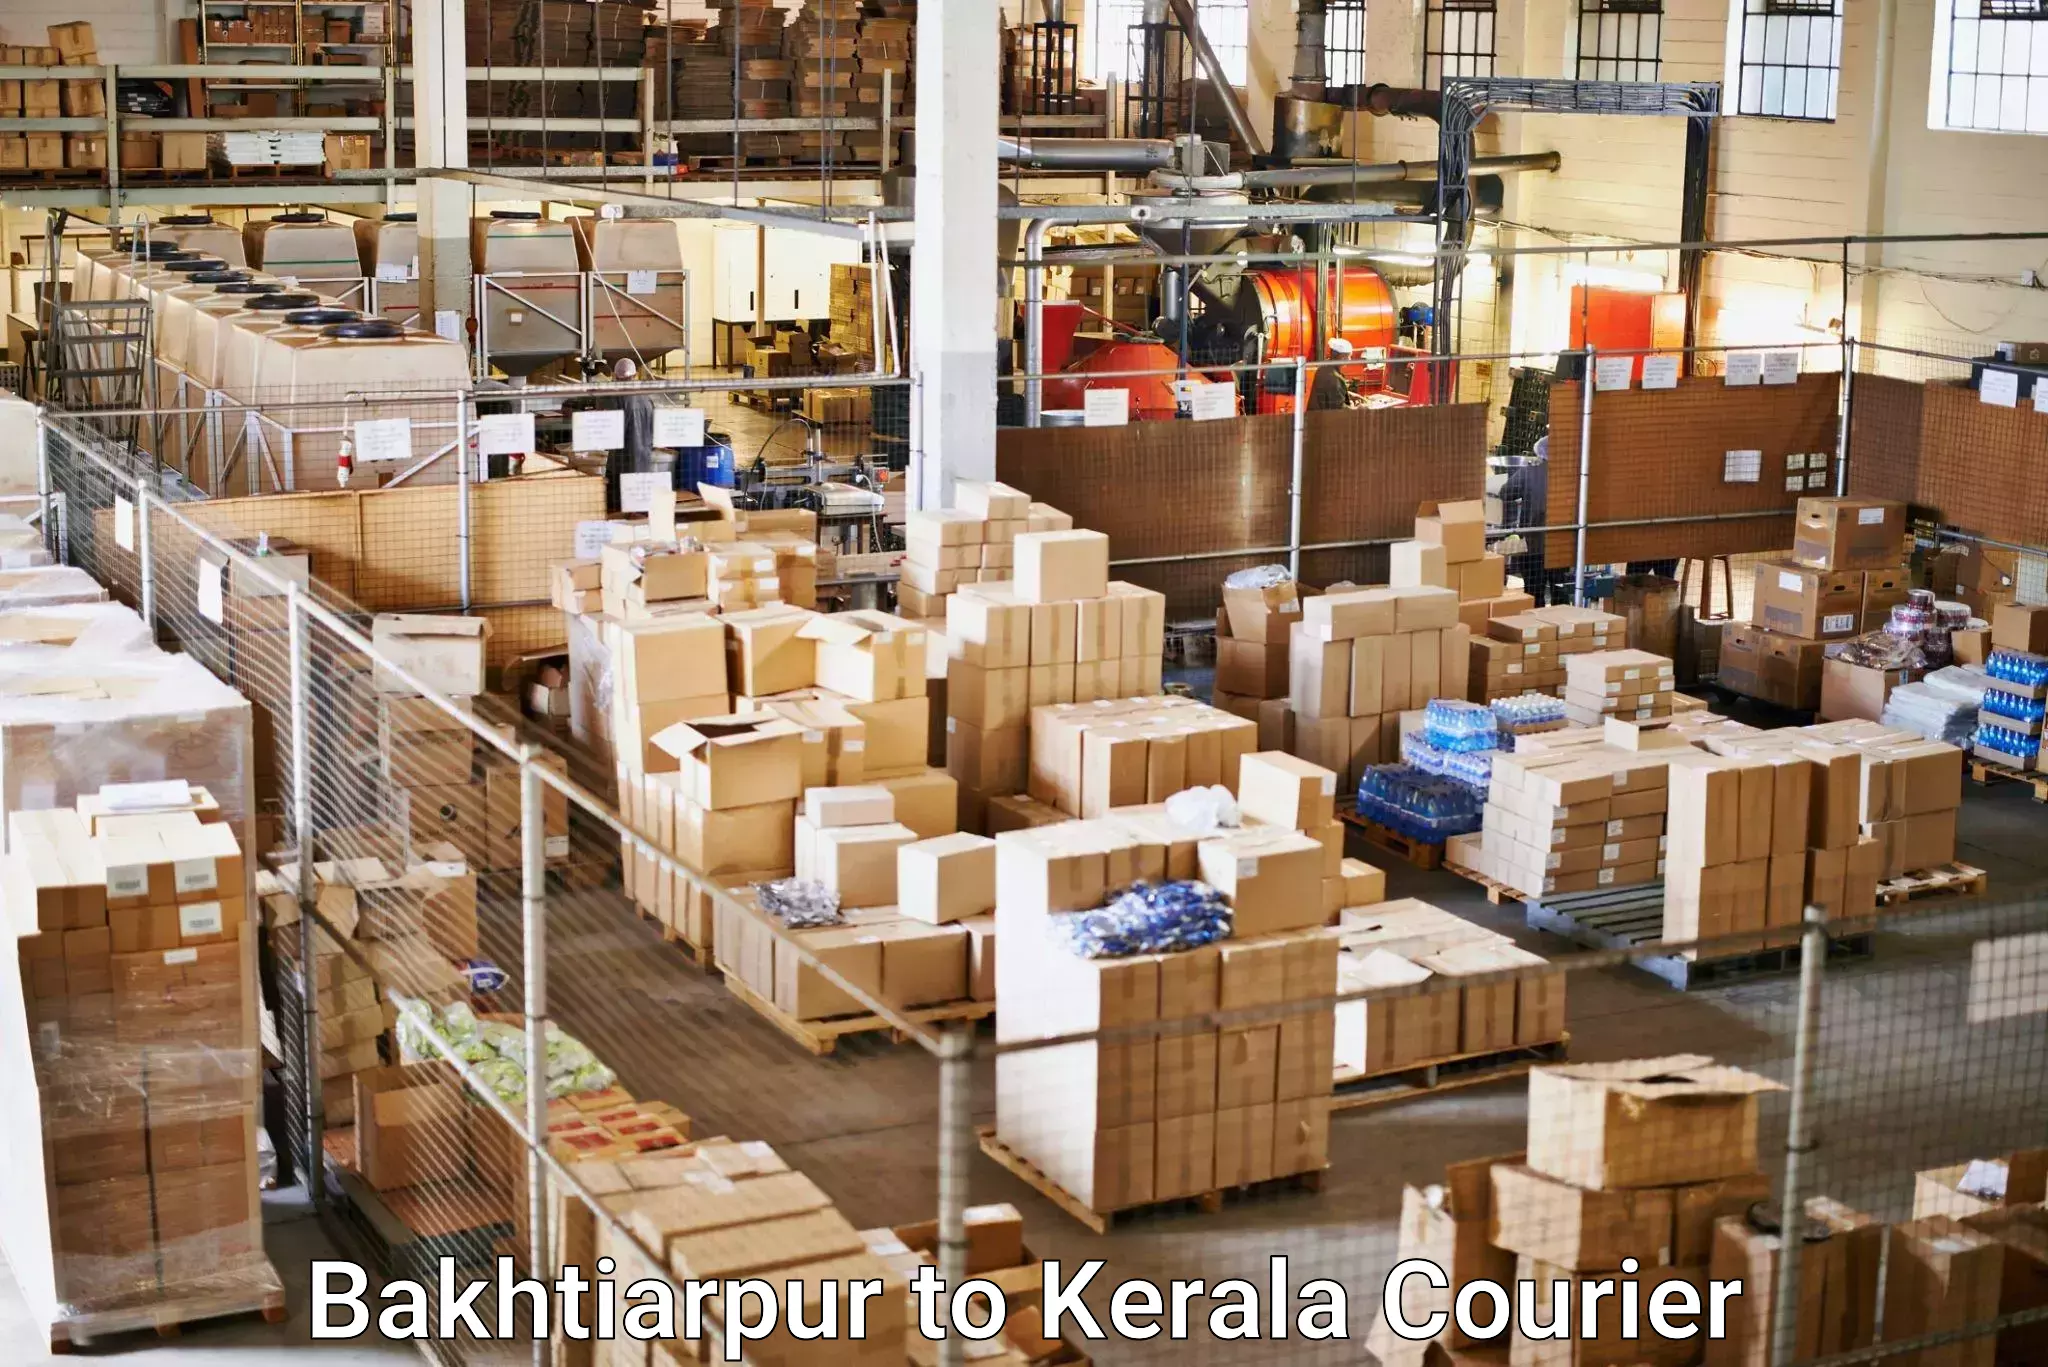 Global courier networks Bakhtiarpur to Cochin Port Kochi